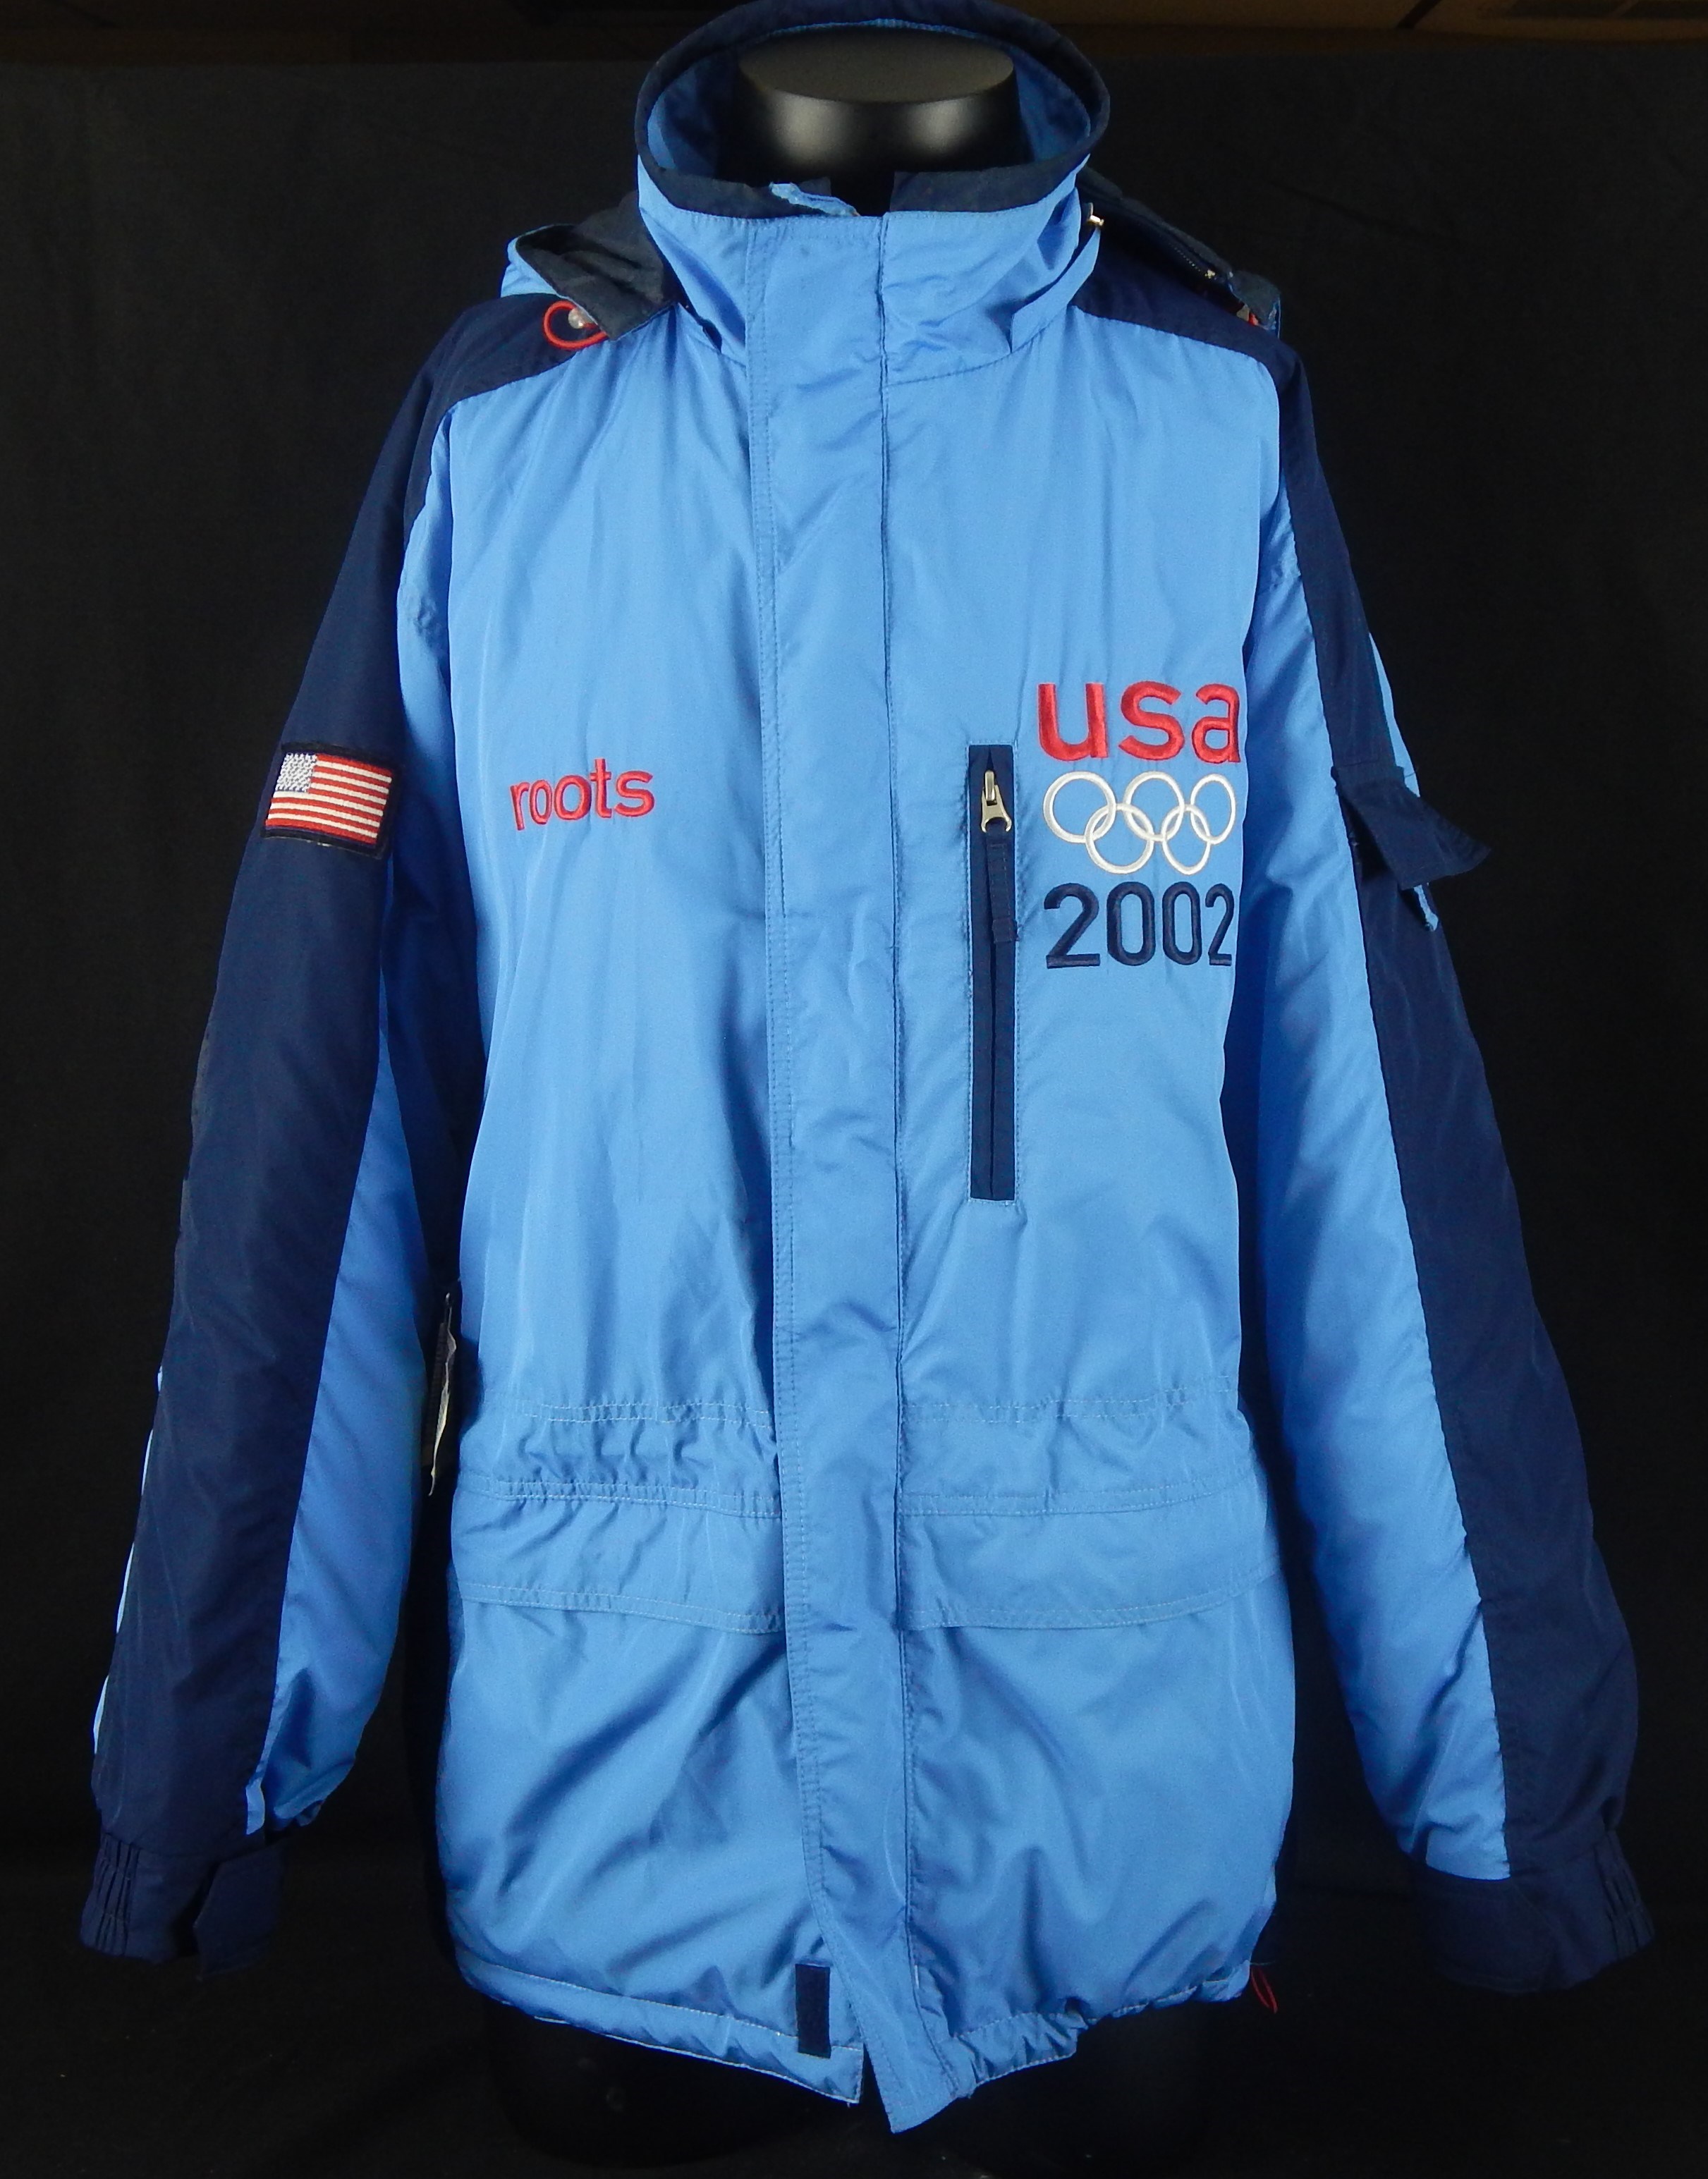 Olympics - 2002 USA Olympic Hockey Team Issued Jacket & Pants